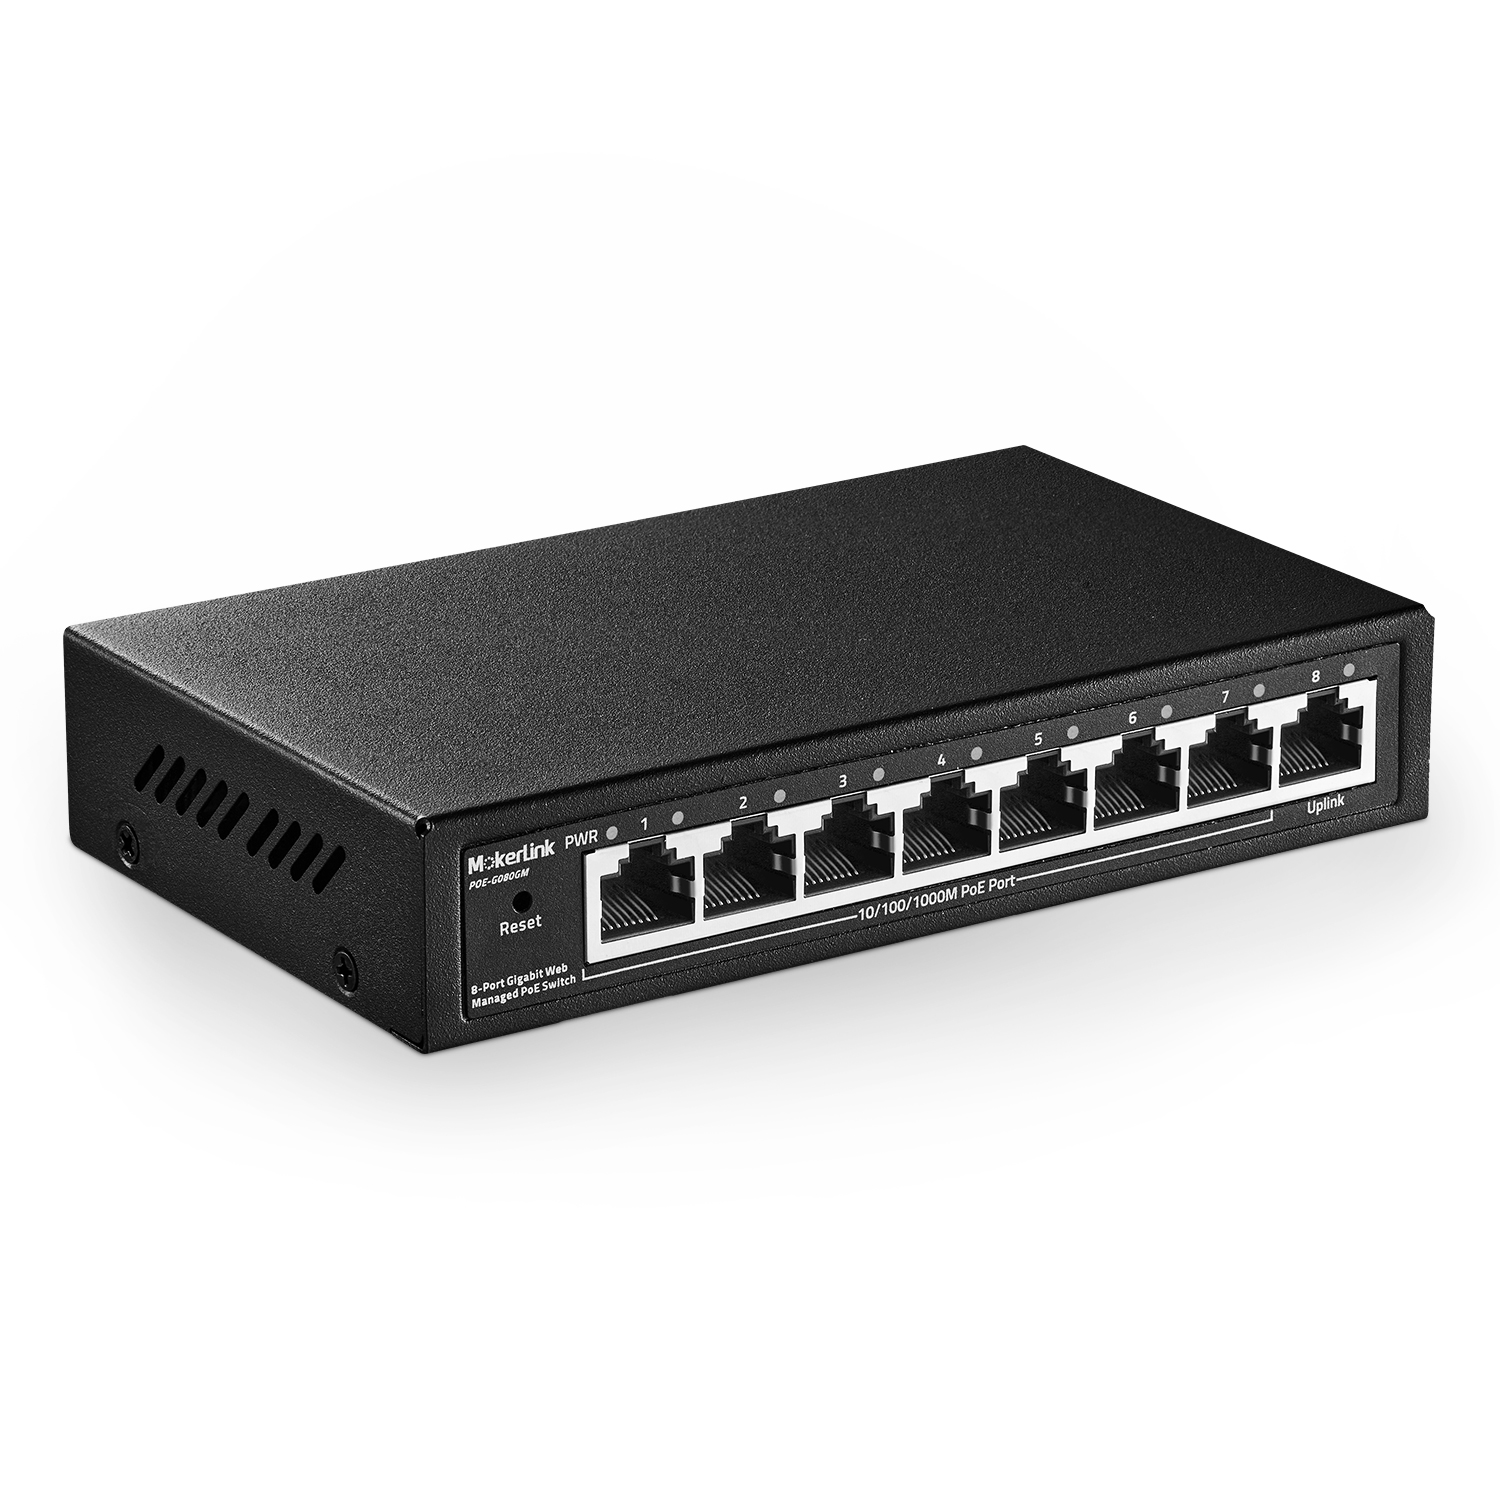 8-Port Gigabit Ethernet PoE Switch with Metal Casing, Desktop or Wall